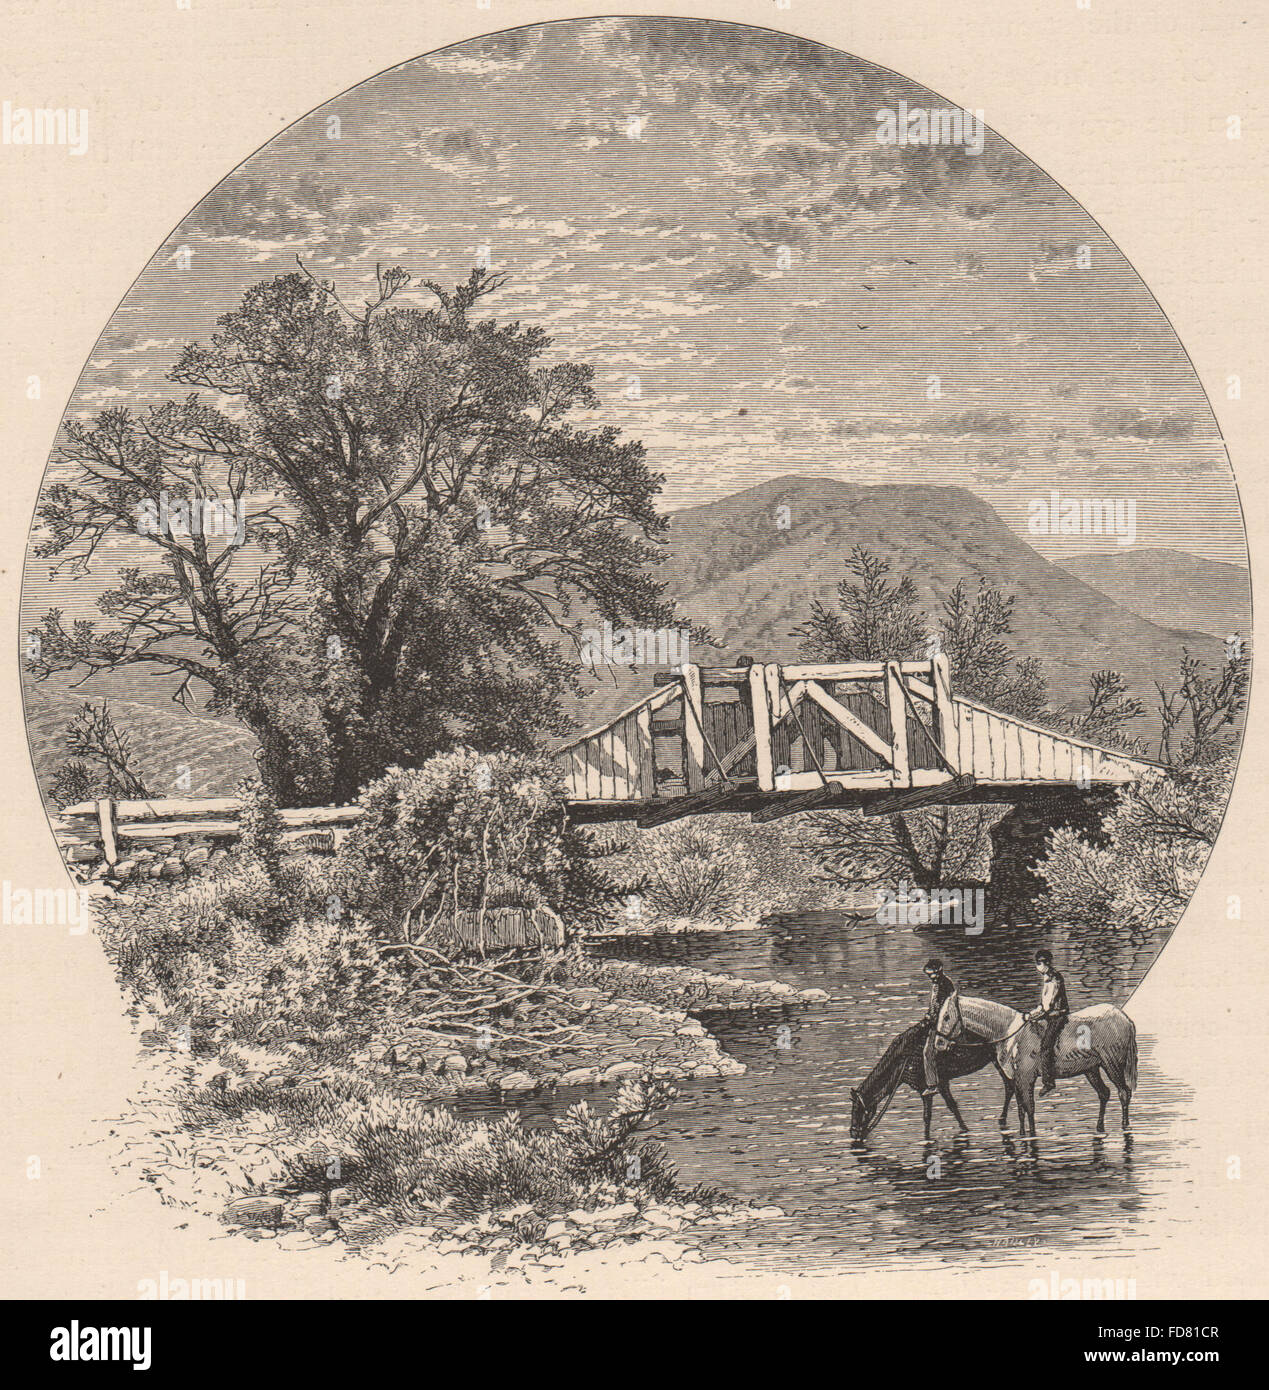 CONNECTICUT: Old Bridge, Blackberry river, near Canaan. Horses, old print 1874 Stock Photo